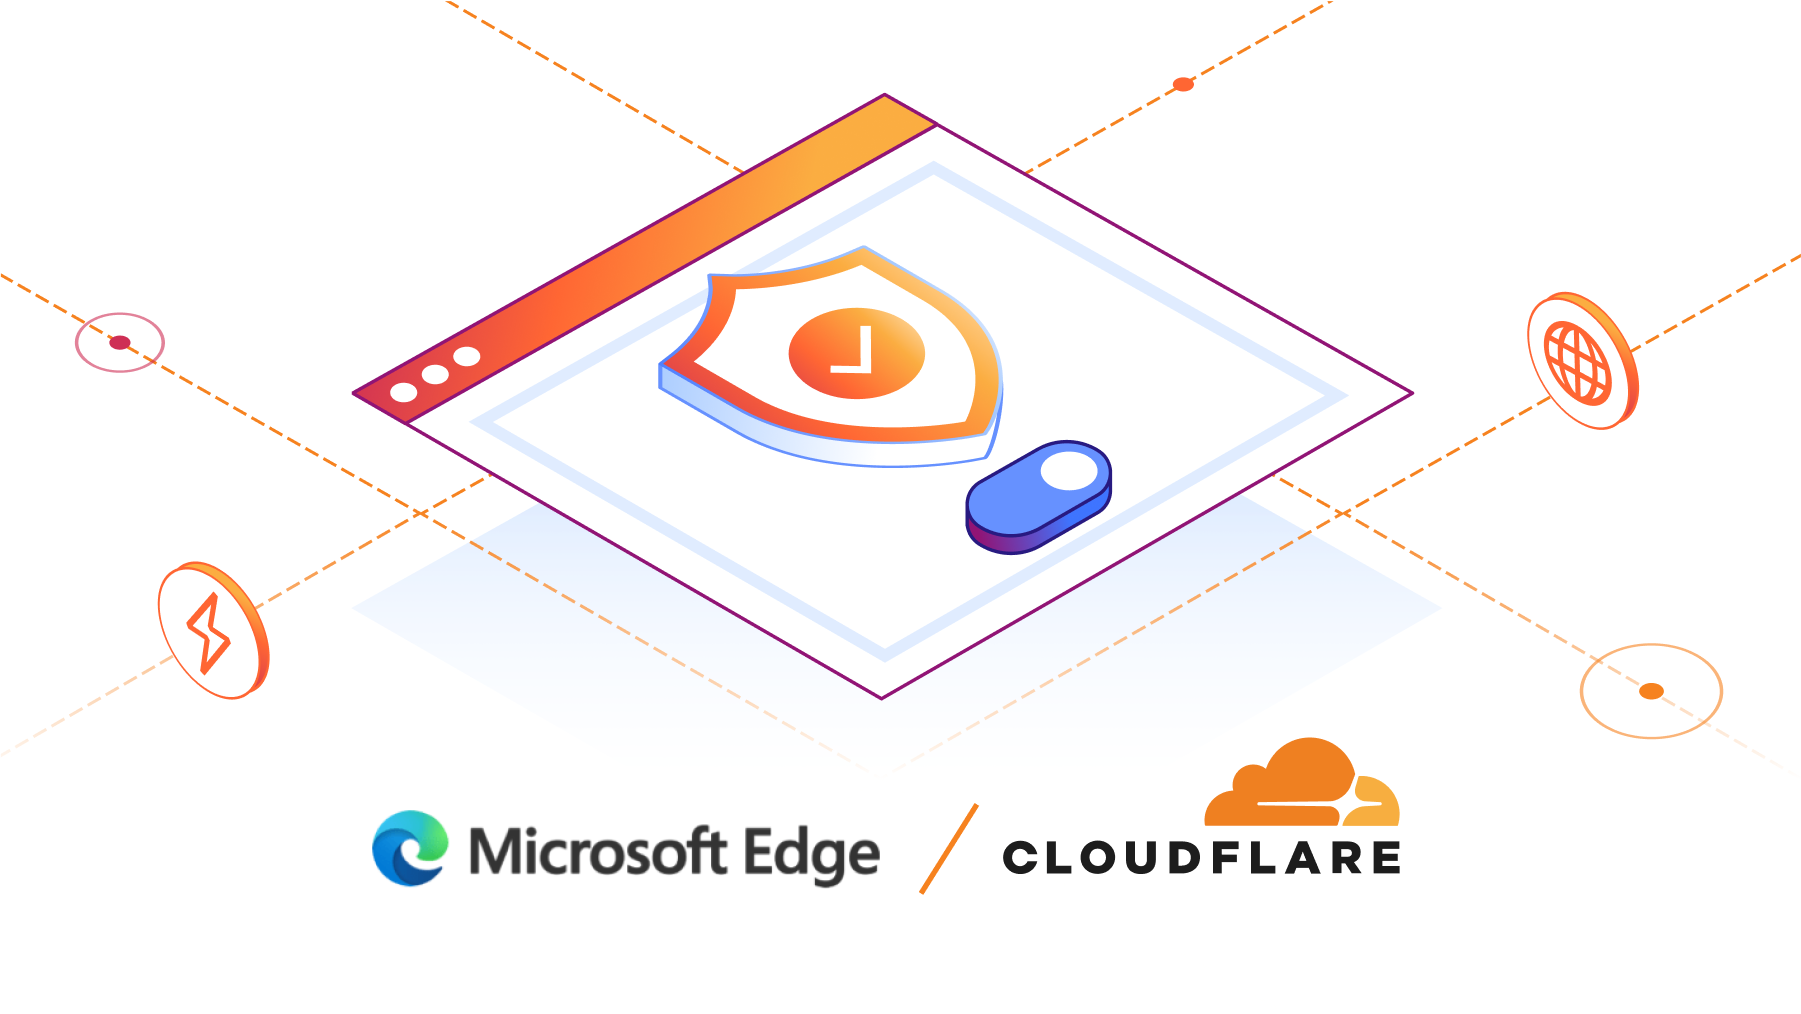 Cloudflare 现正为 Microsoft Edge Secure Network 提供支持
